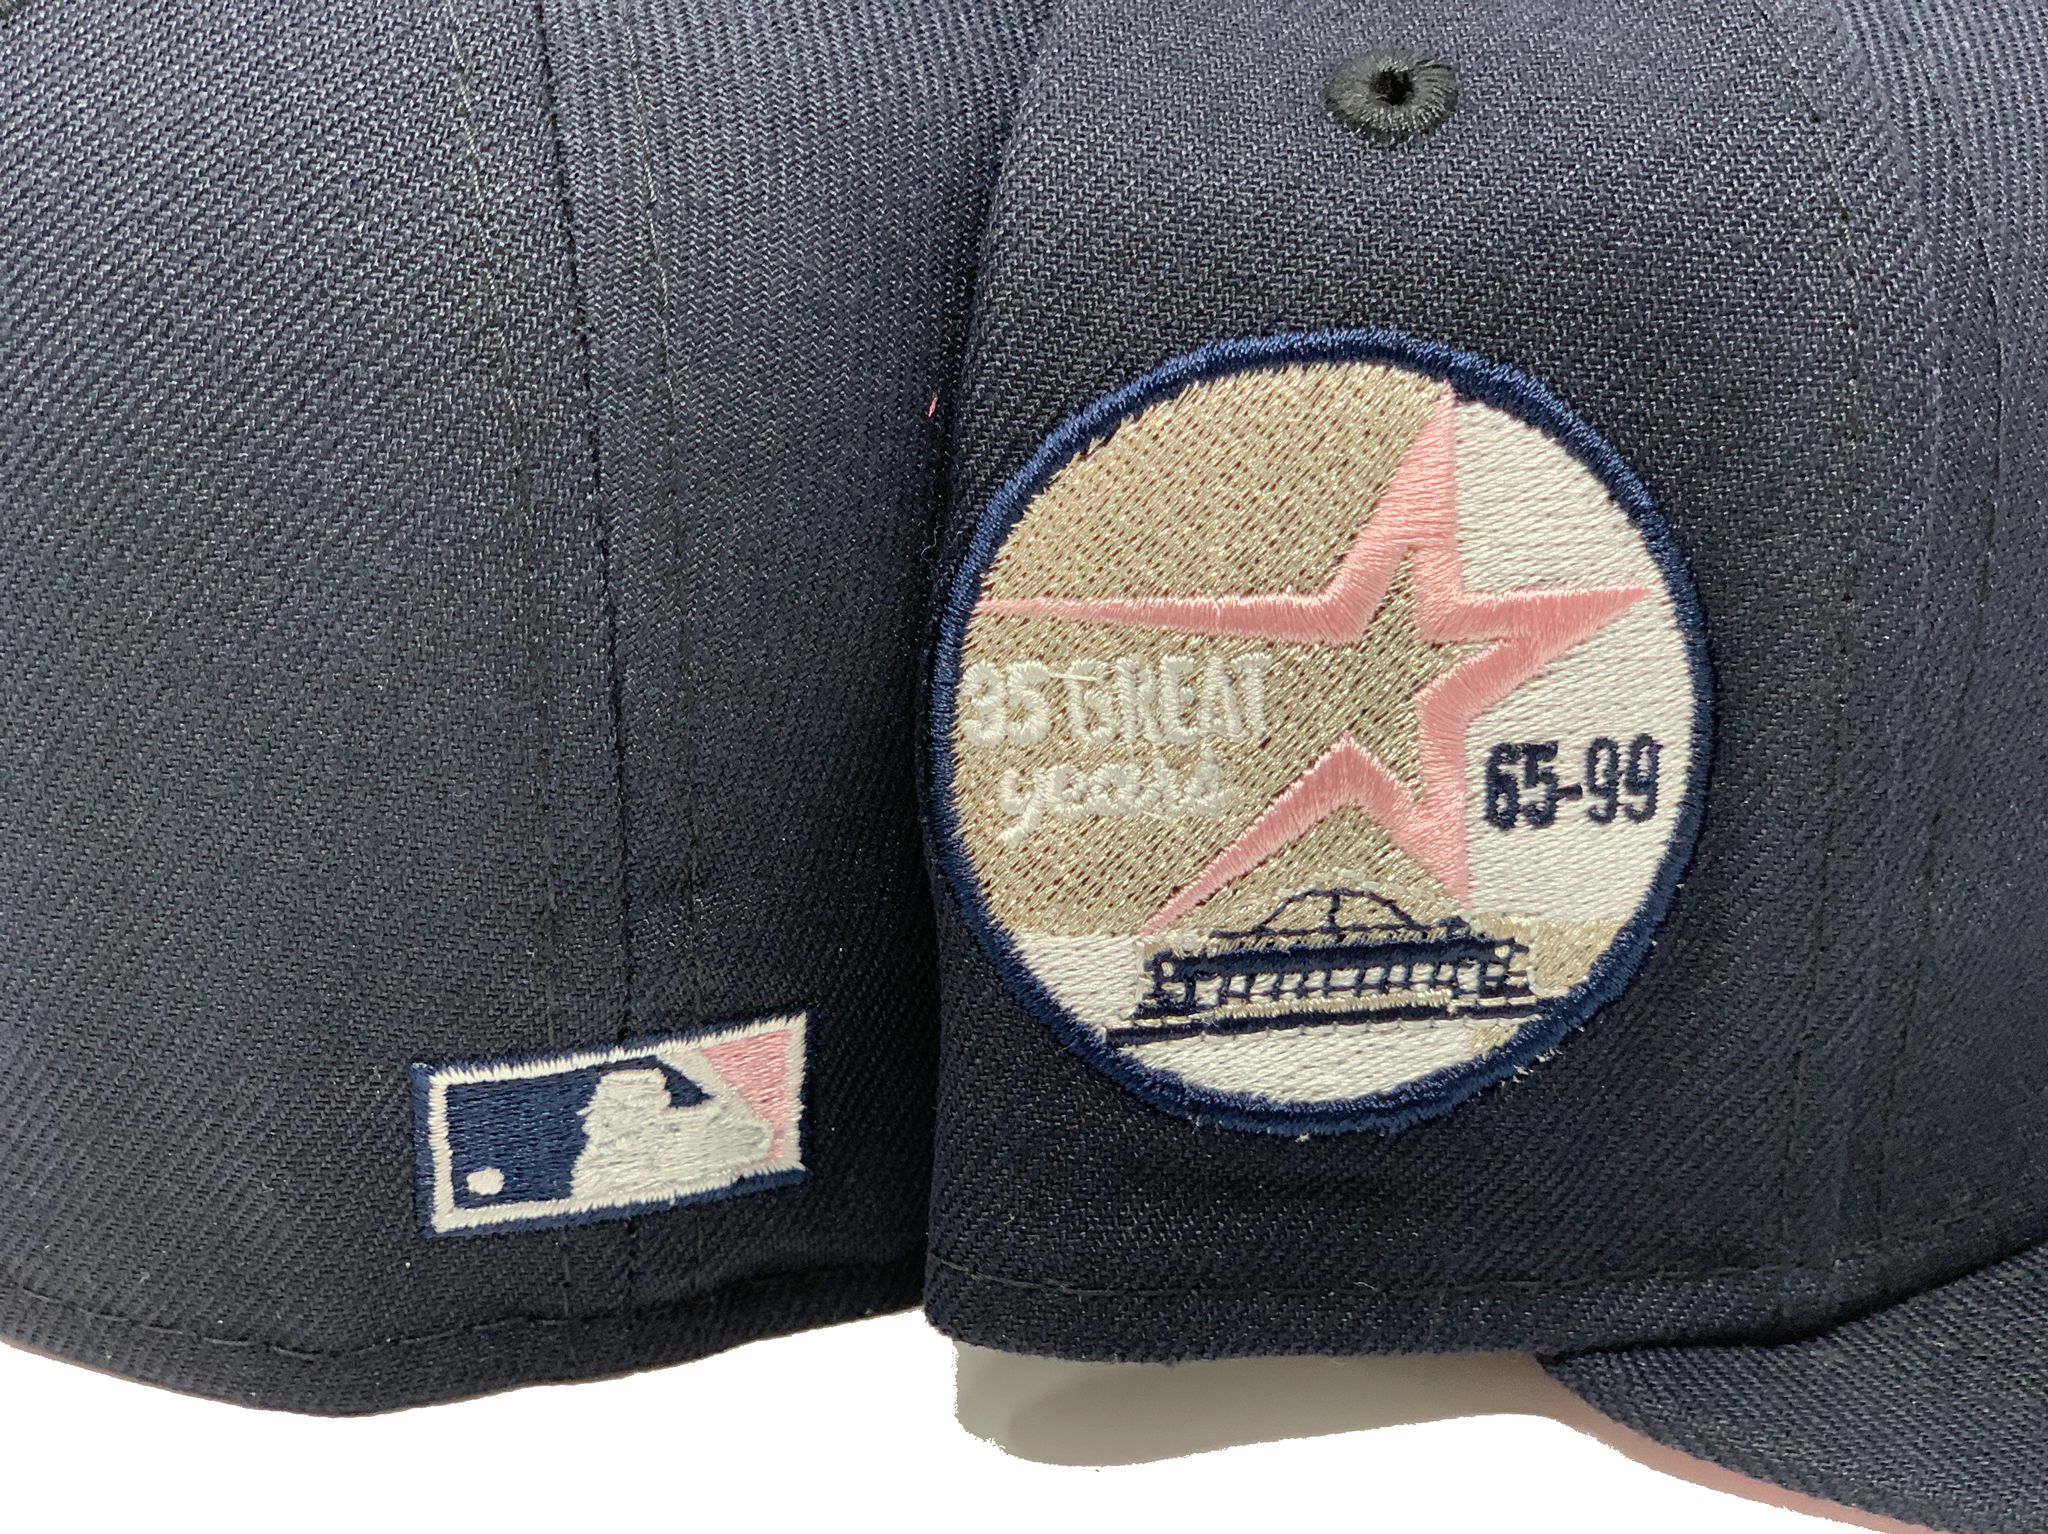 Men's New Era Stone/Navy Houston Astros Retro 59FIFTY Fitted Hat